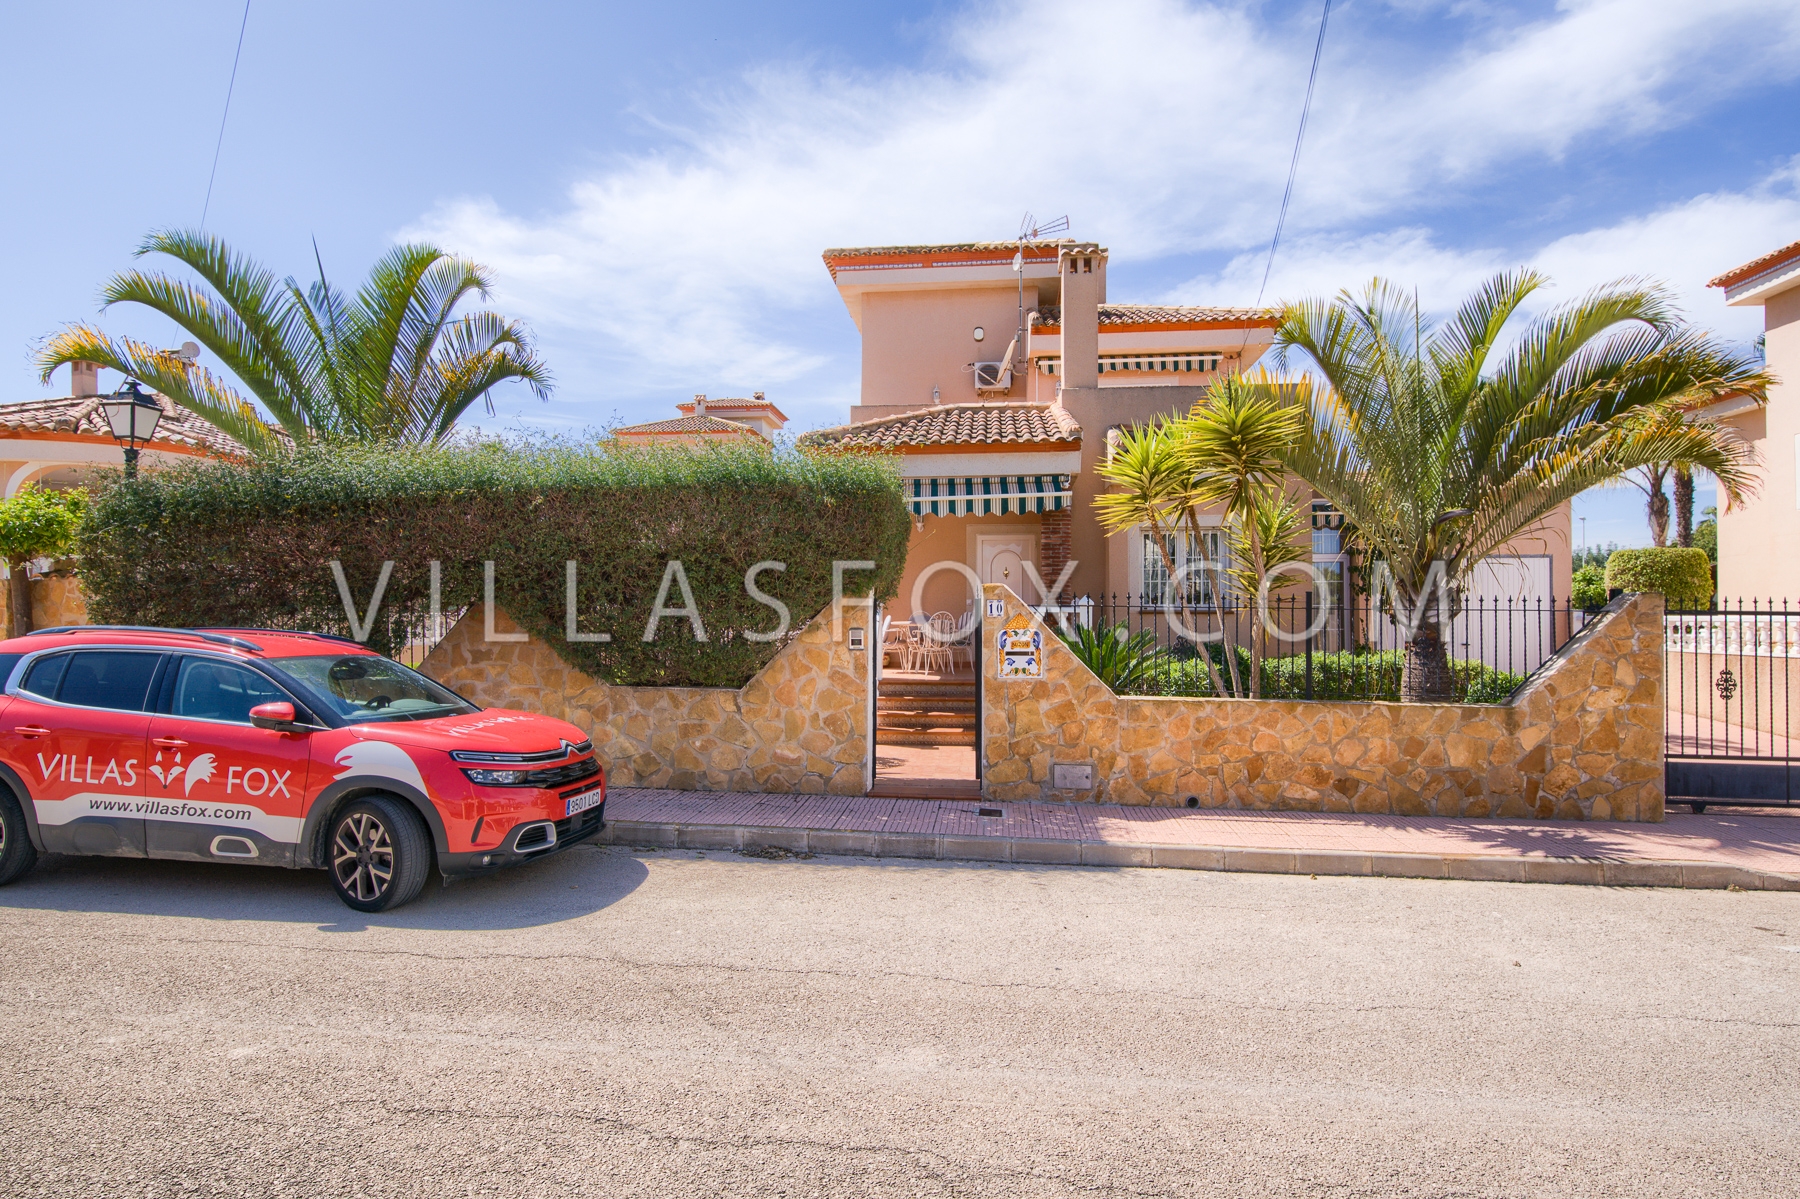 Villa Torrestrella à vendre, 3 chambres, piscine privée, garage